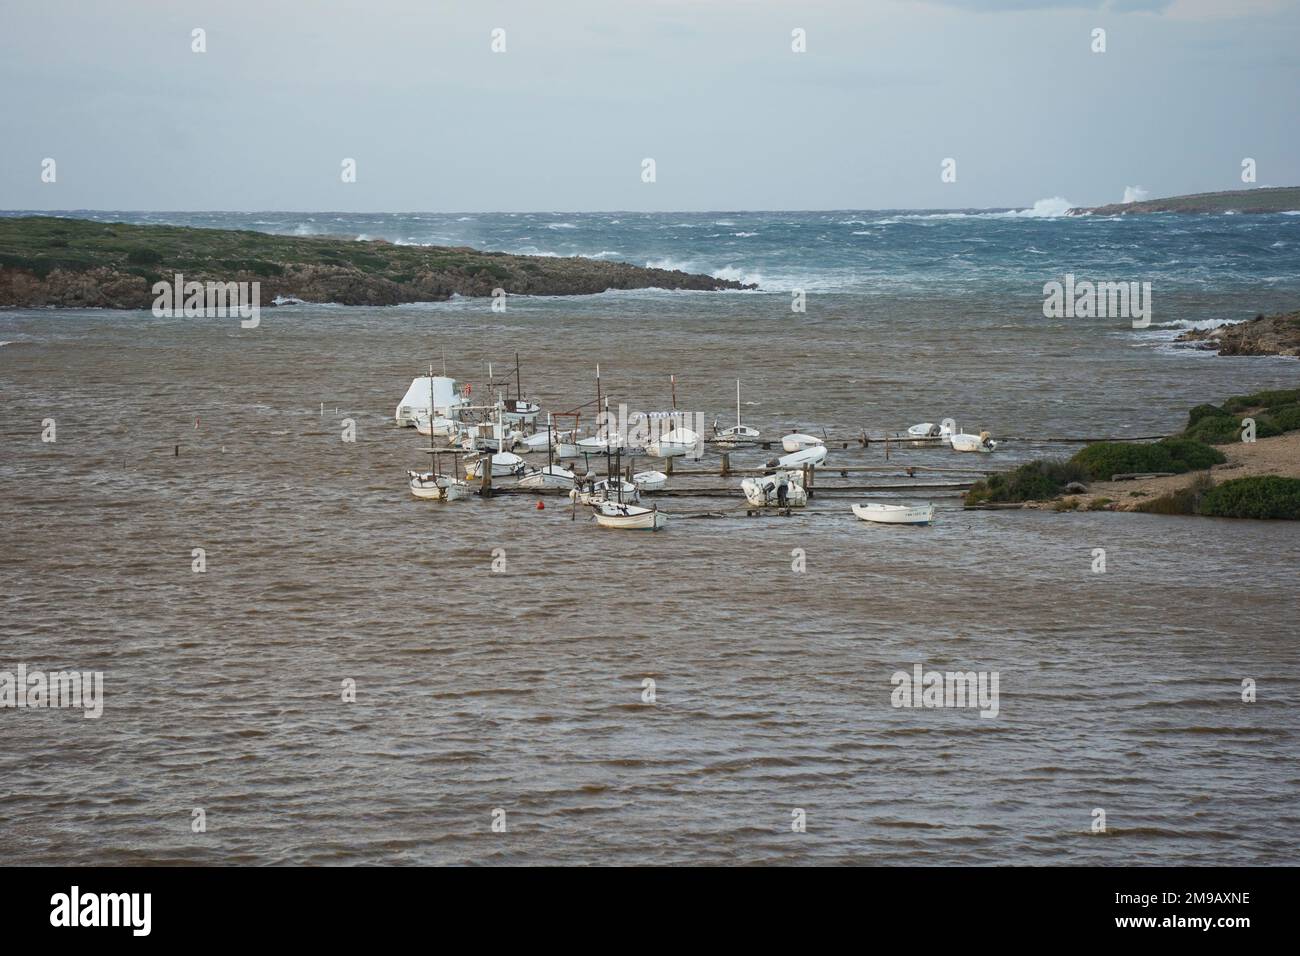 Port de Sanitja, port of, Sanitja with small fishing boats, Menorca, Balearic islands, Spain. Stock Photo